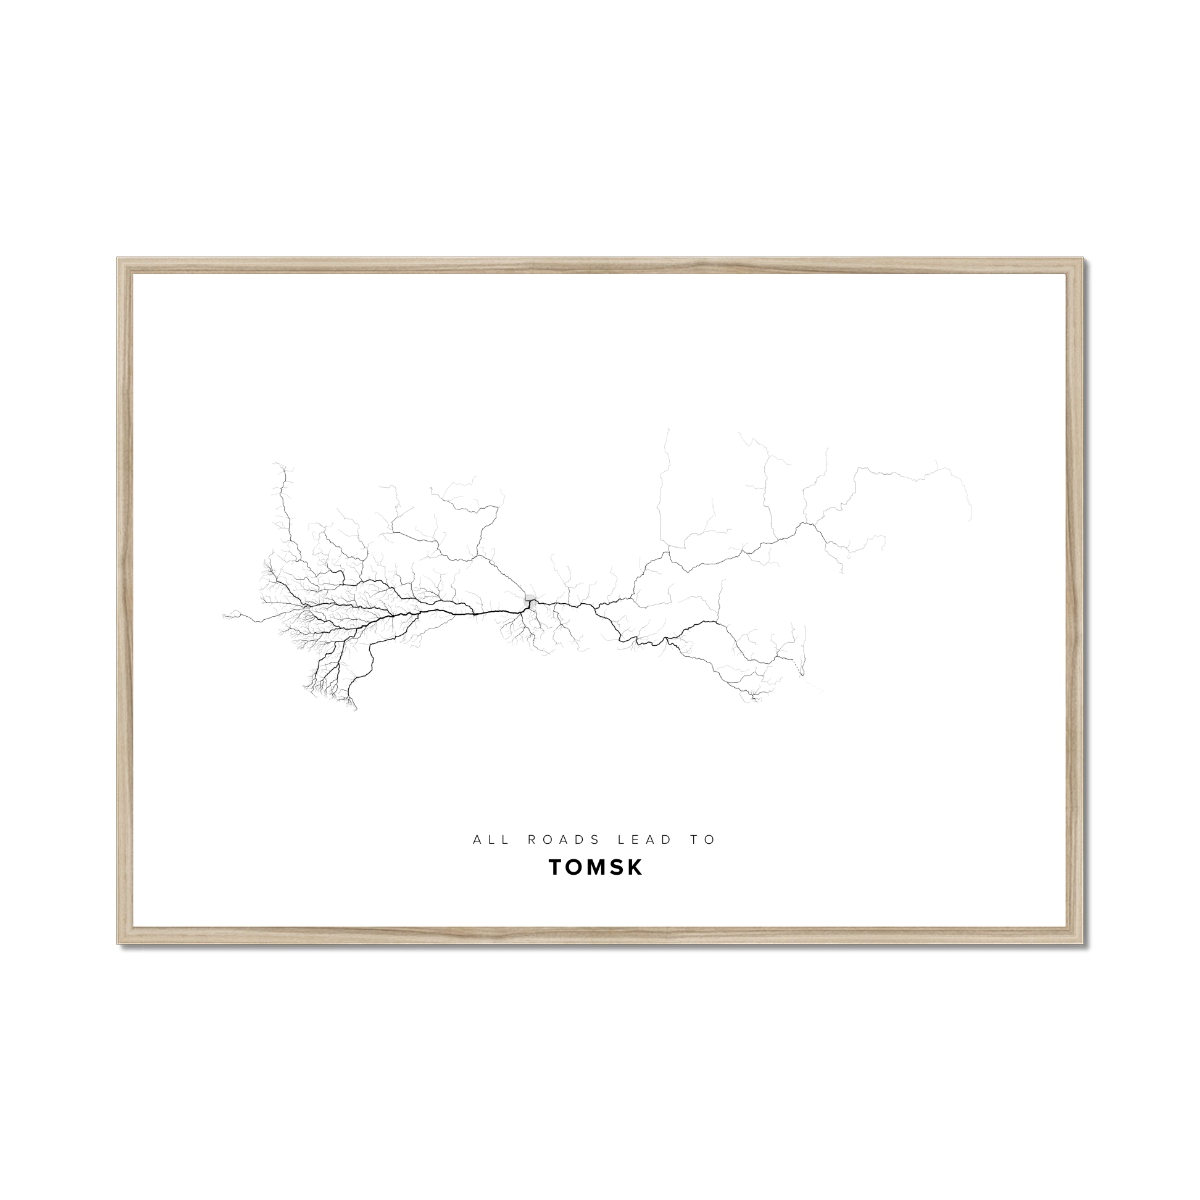 All roads lead to Tomsk (Russian Federation) Fine Art Map Print